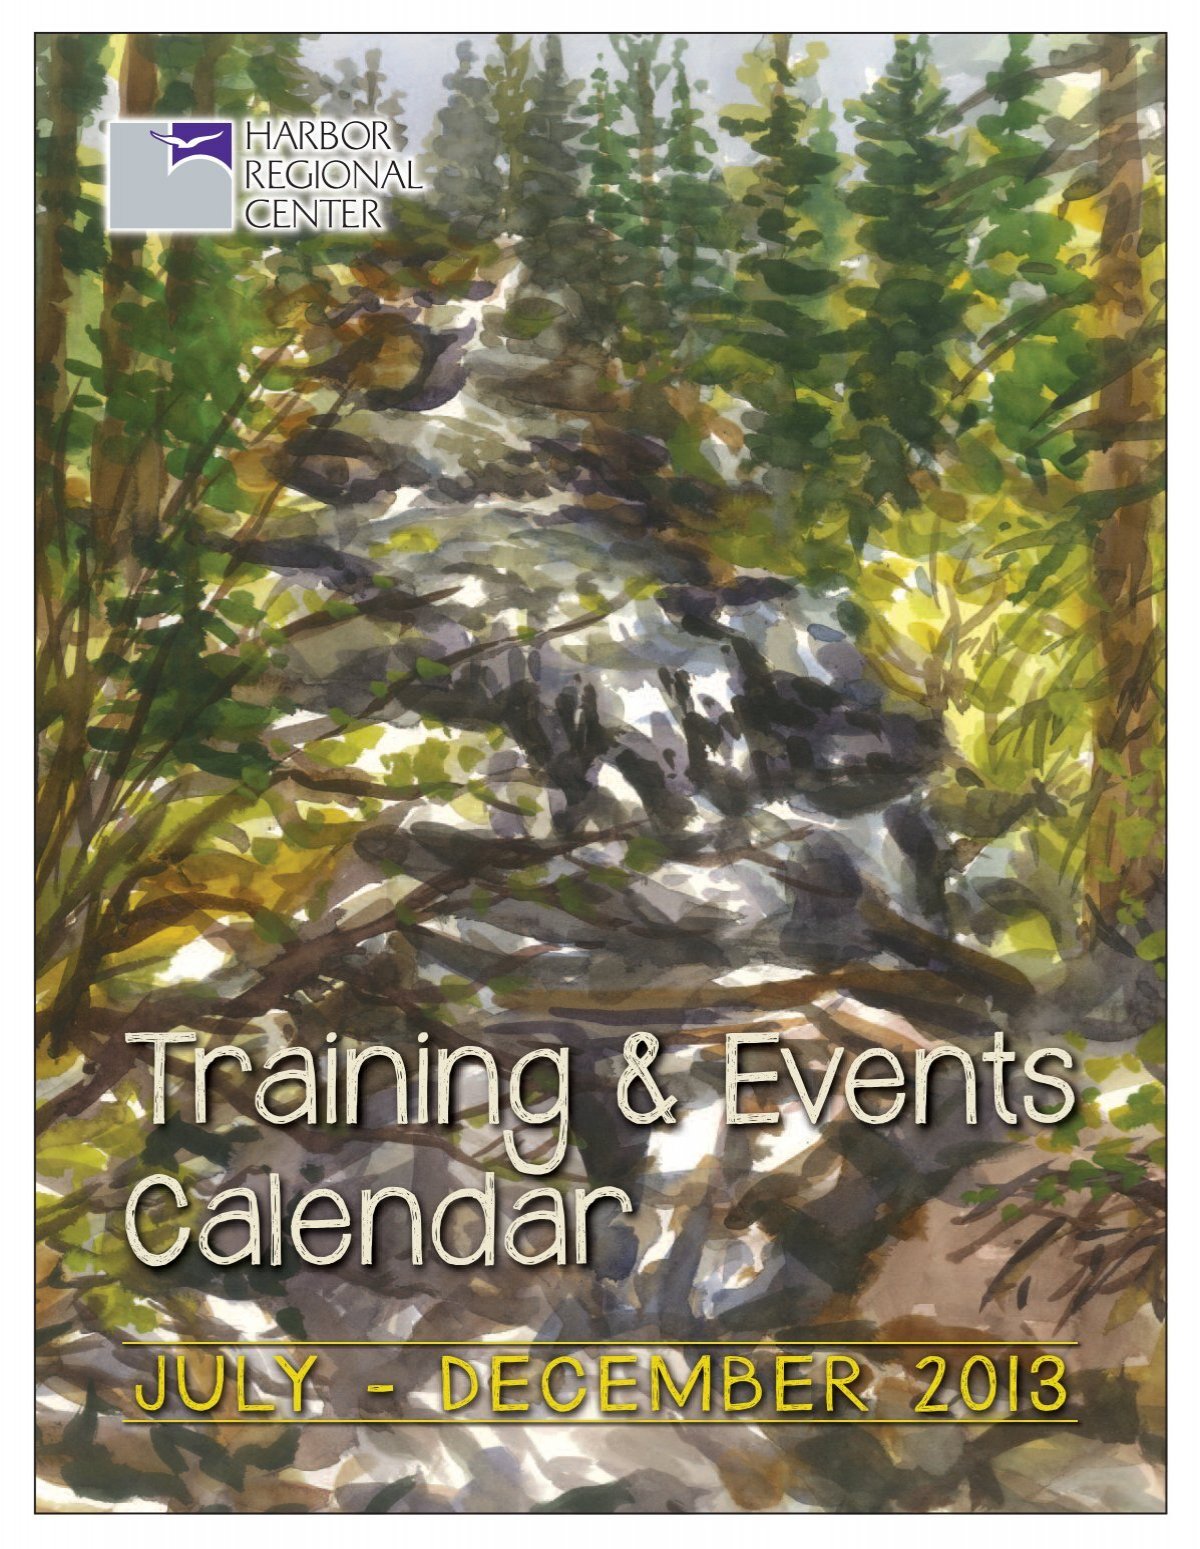 Training Events Calendar Harbor Regional Center